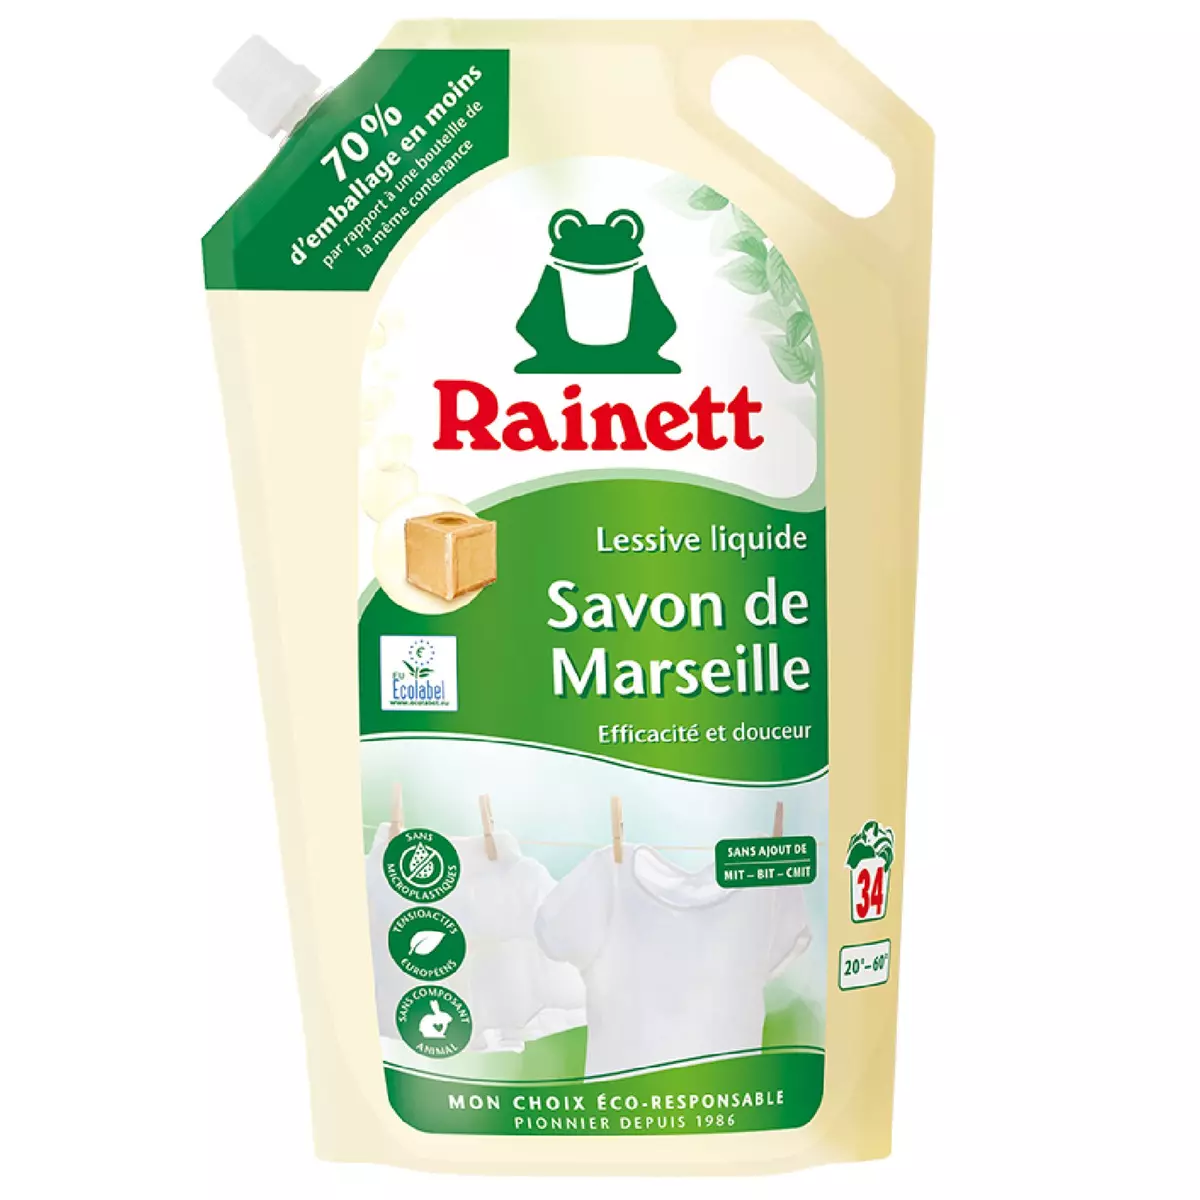 RAINETT Lessive liquide savon de marseille 34 lavages 1.7L